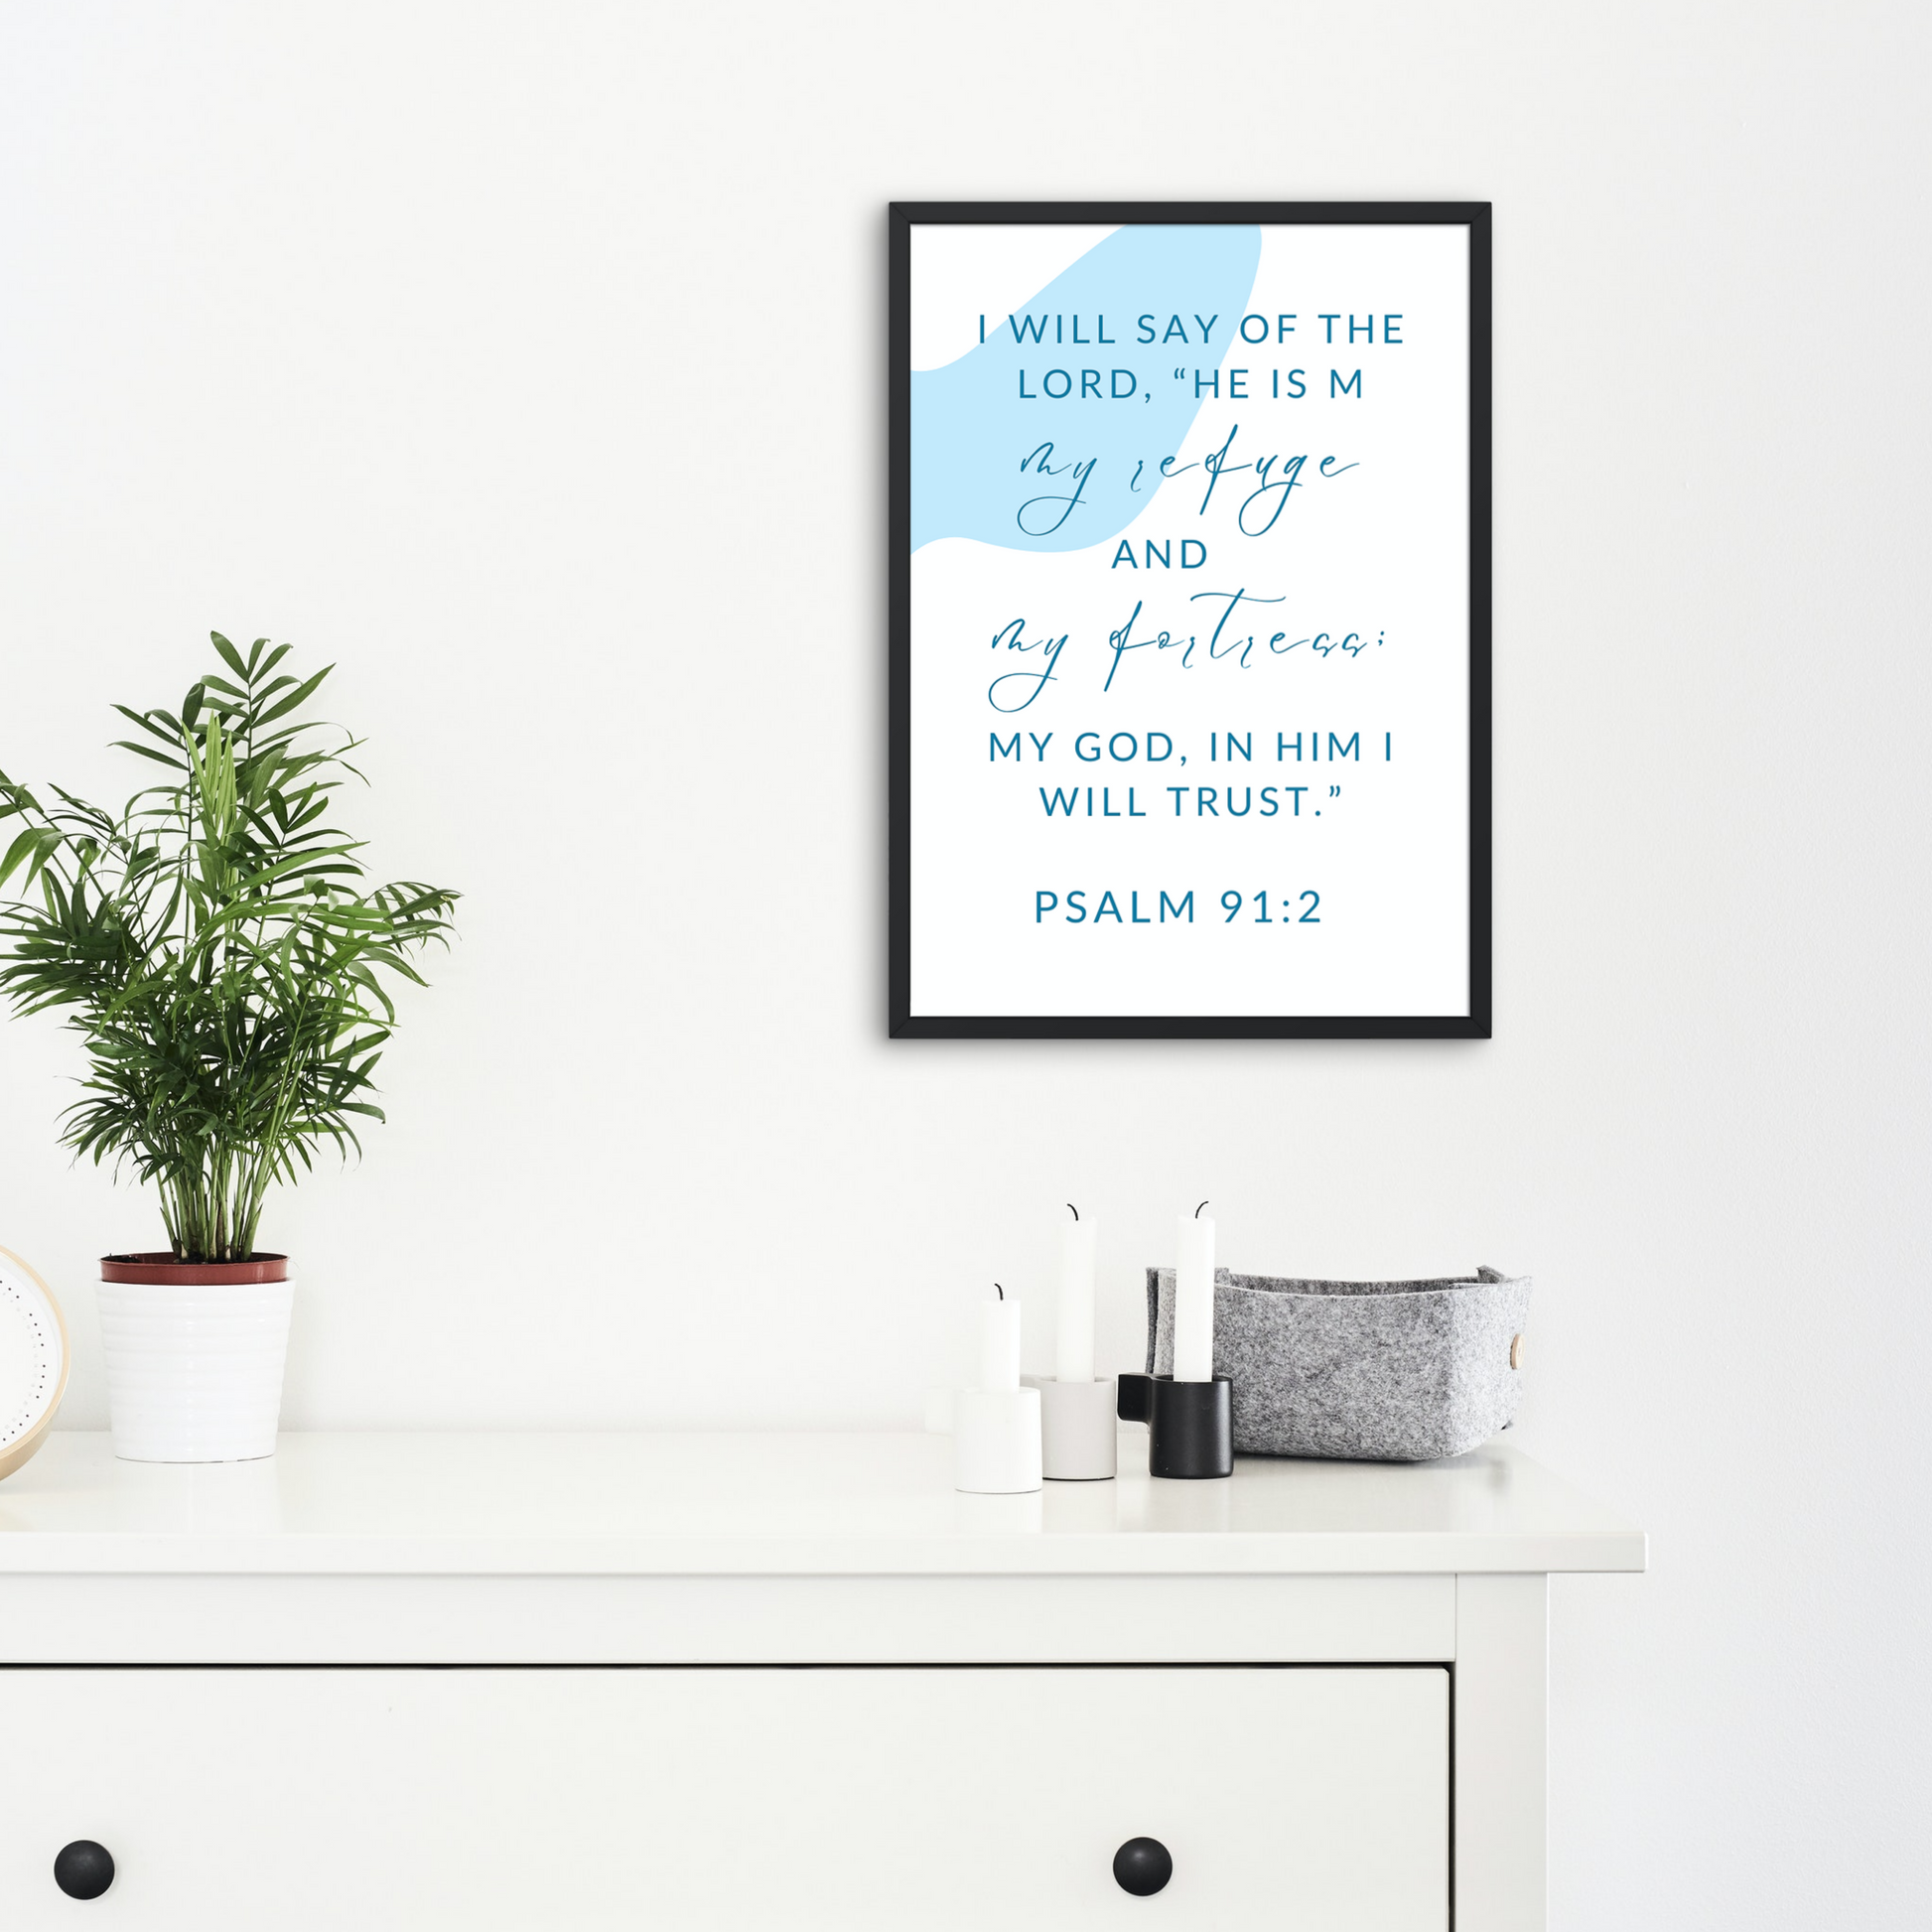 Psalm 91:2 Encouragement Wall Print - gracebyfaithandgrace